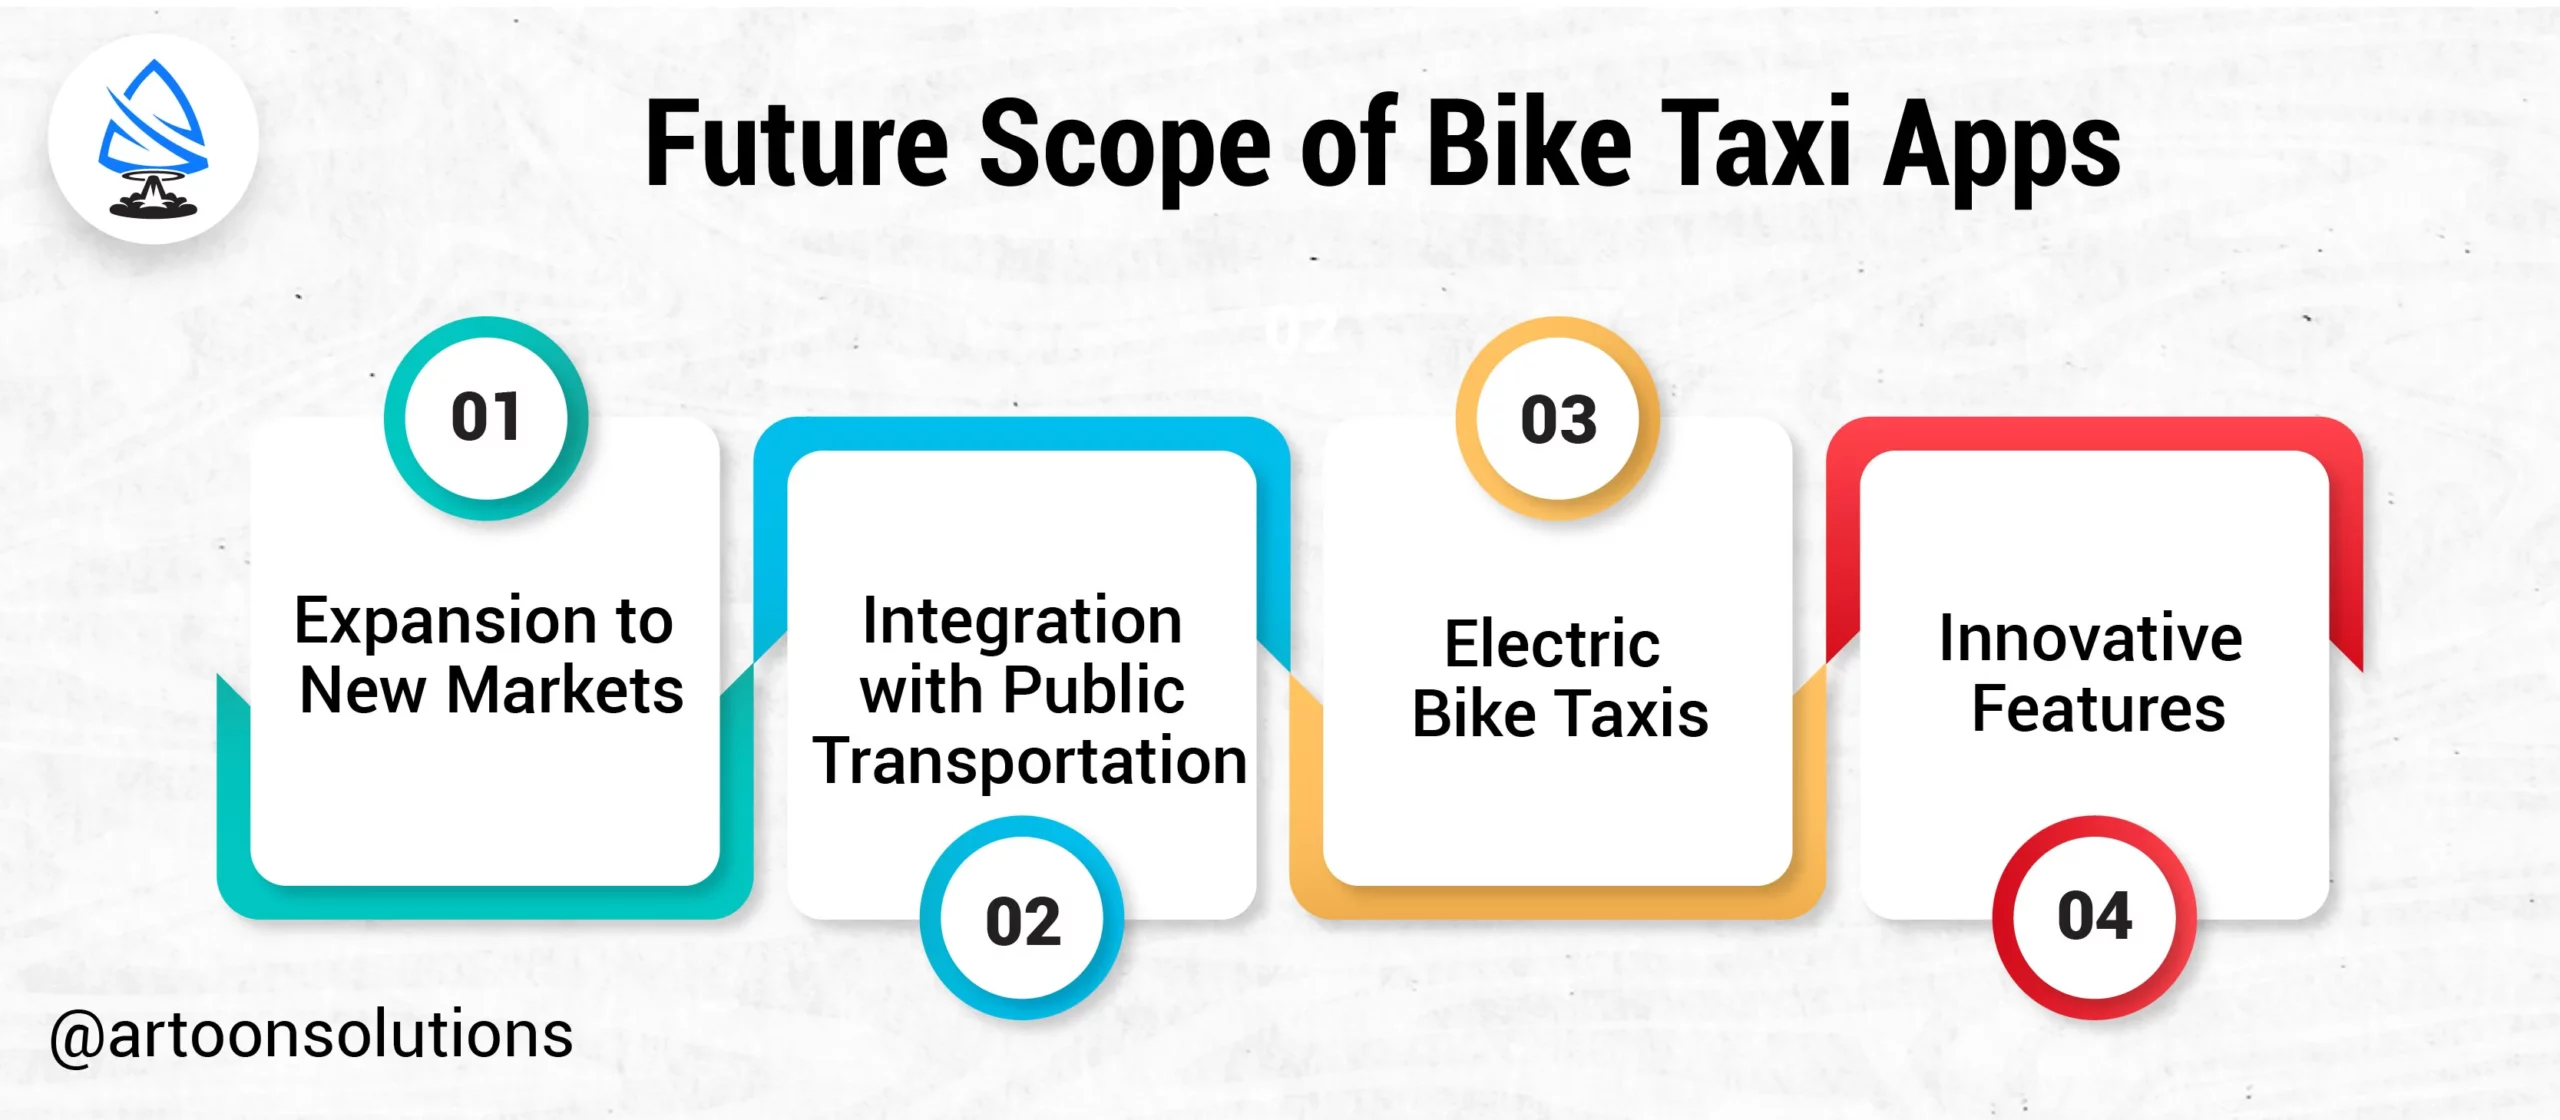 Future Scope of Bike Taxi Apps